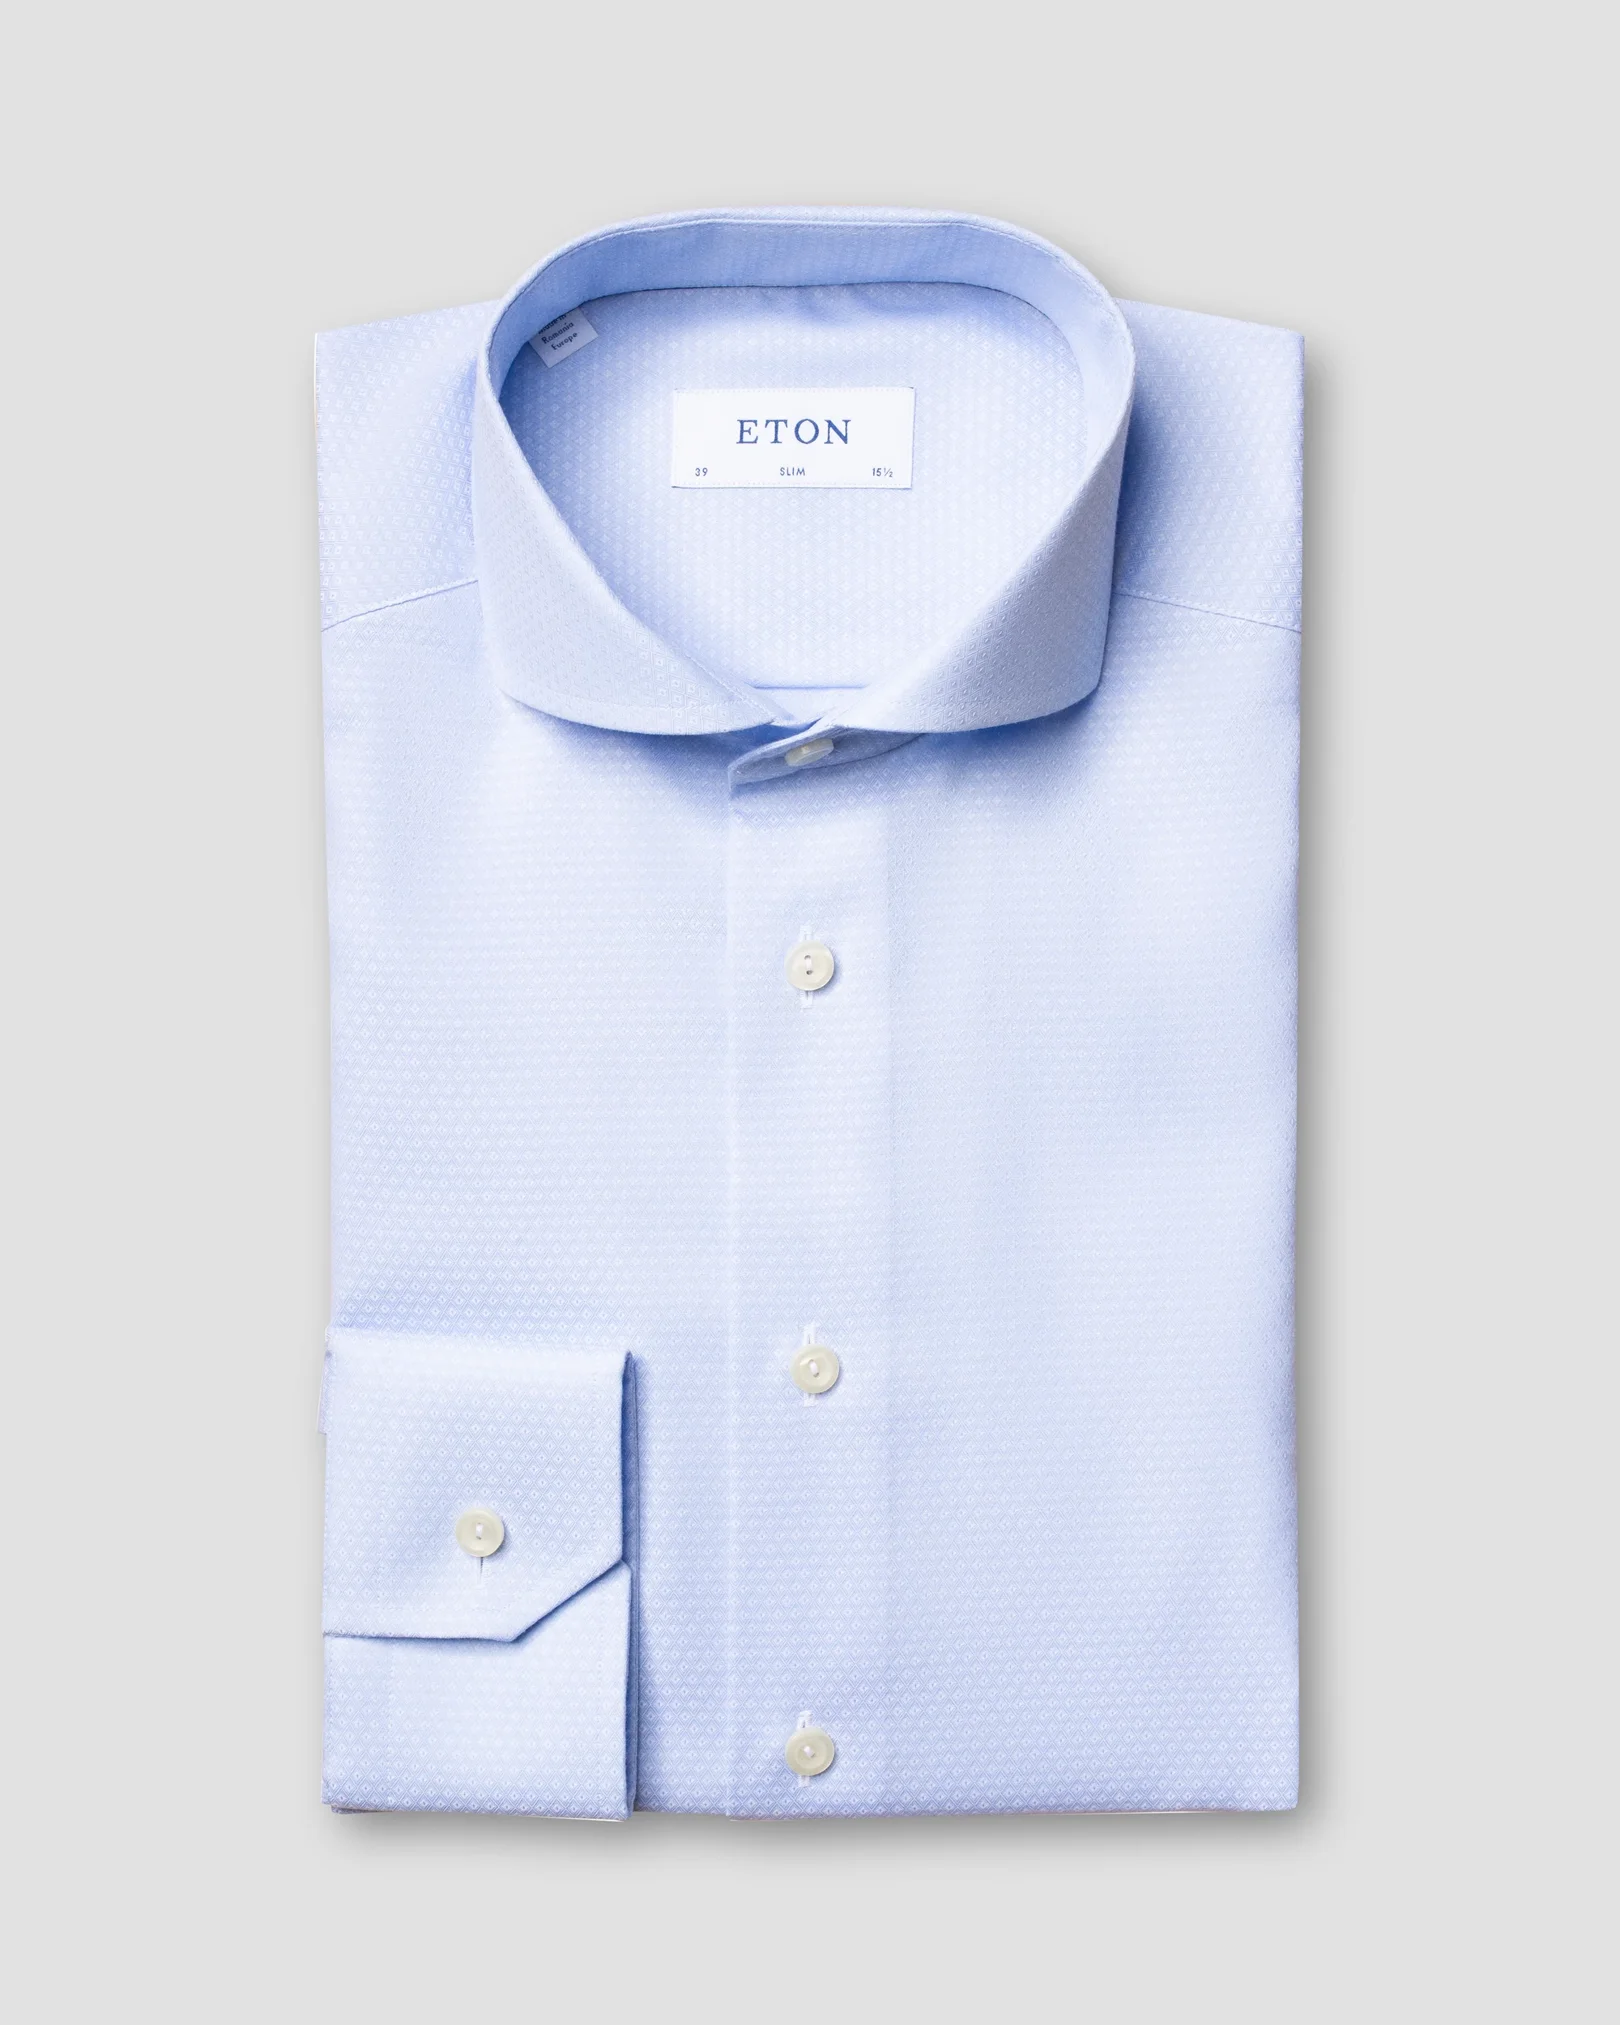 Eton - light blue diamond weave shirt extreme cut away